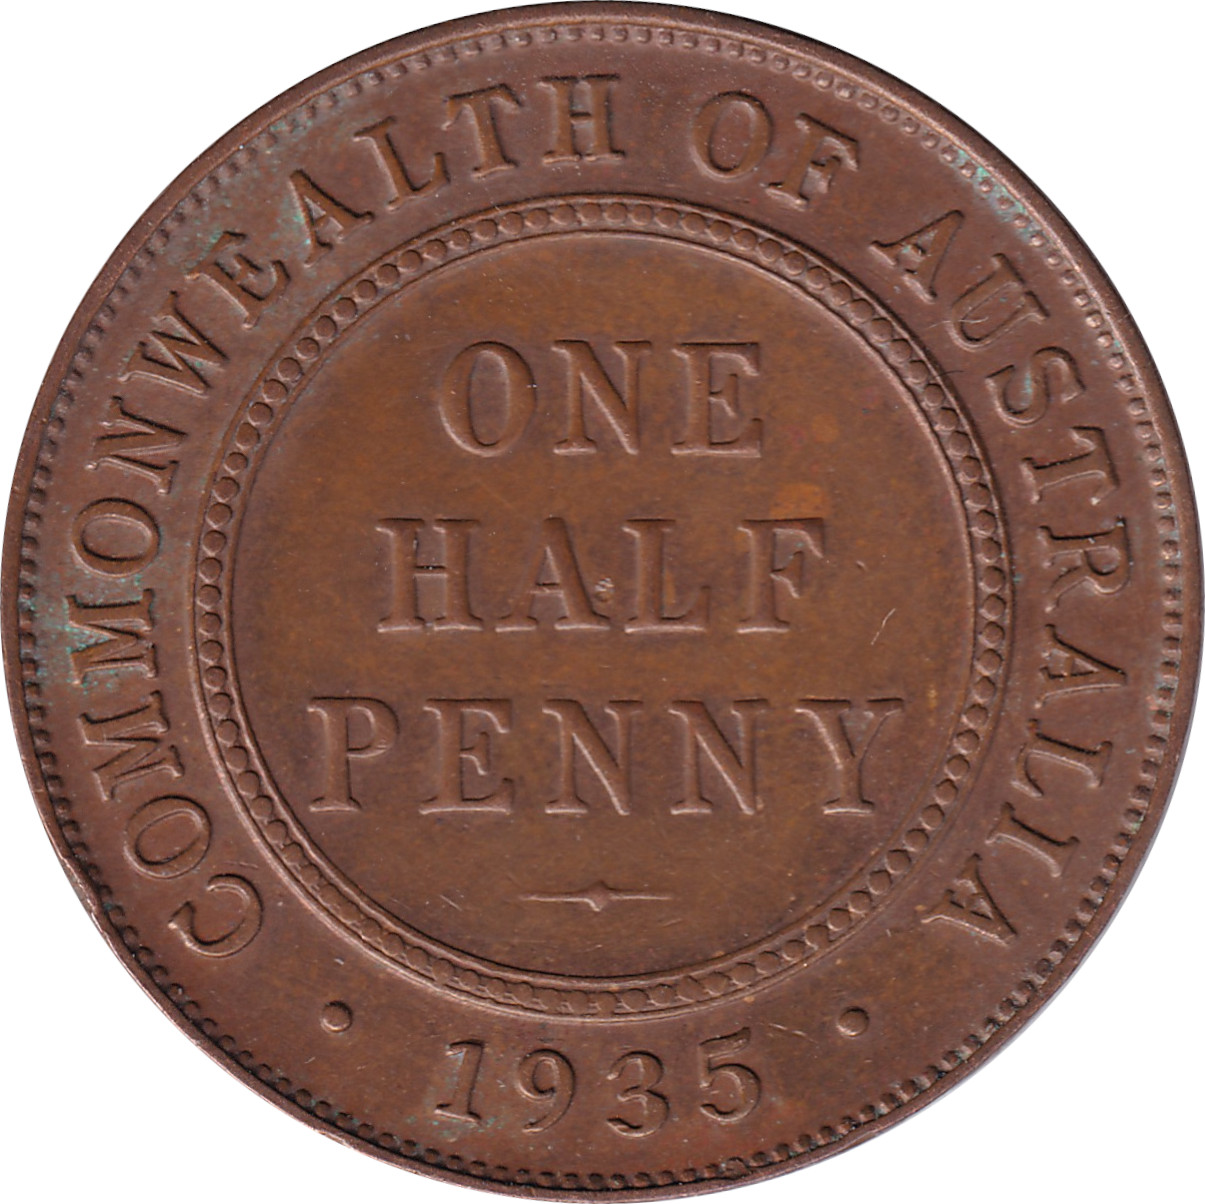 1/2 penny - George V